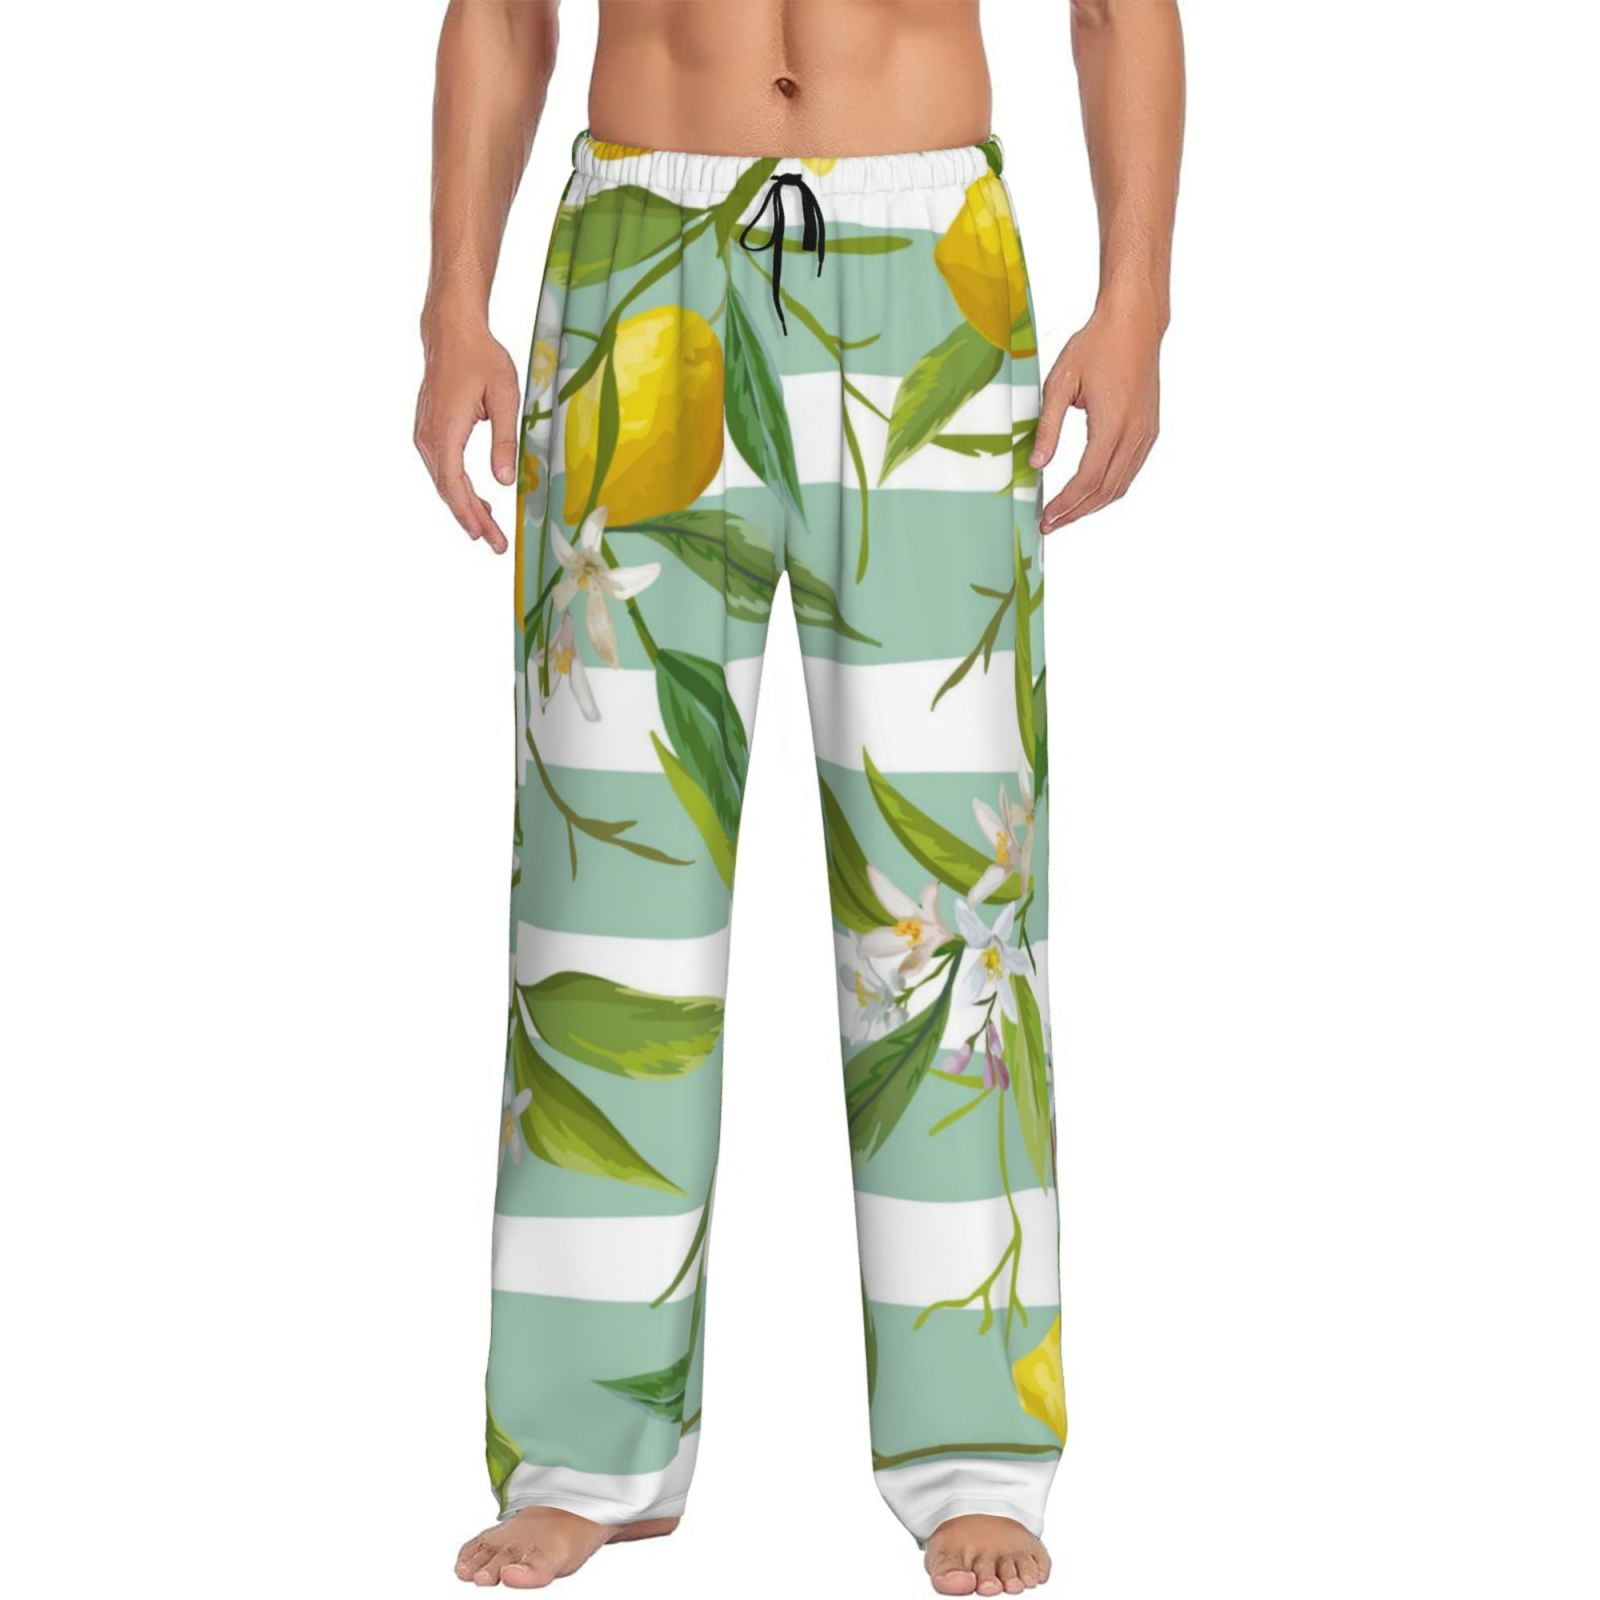 Junzan Men'S Pajama Pants Lemon Sleepwear Pants Pj Bottoms